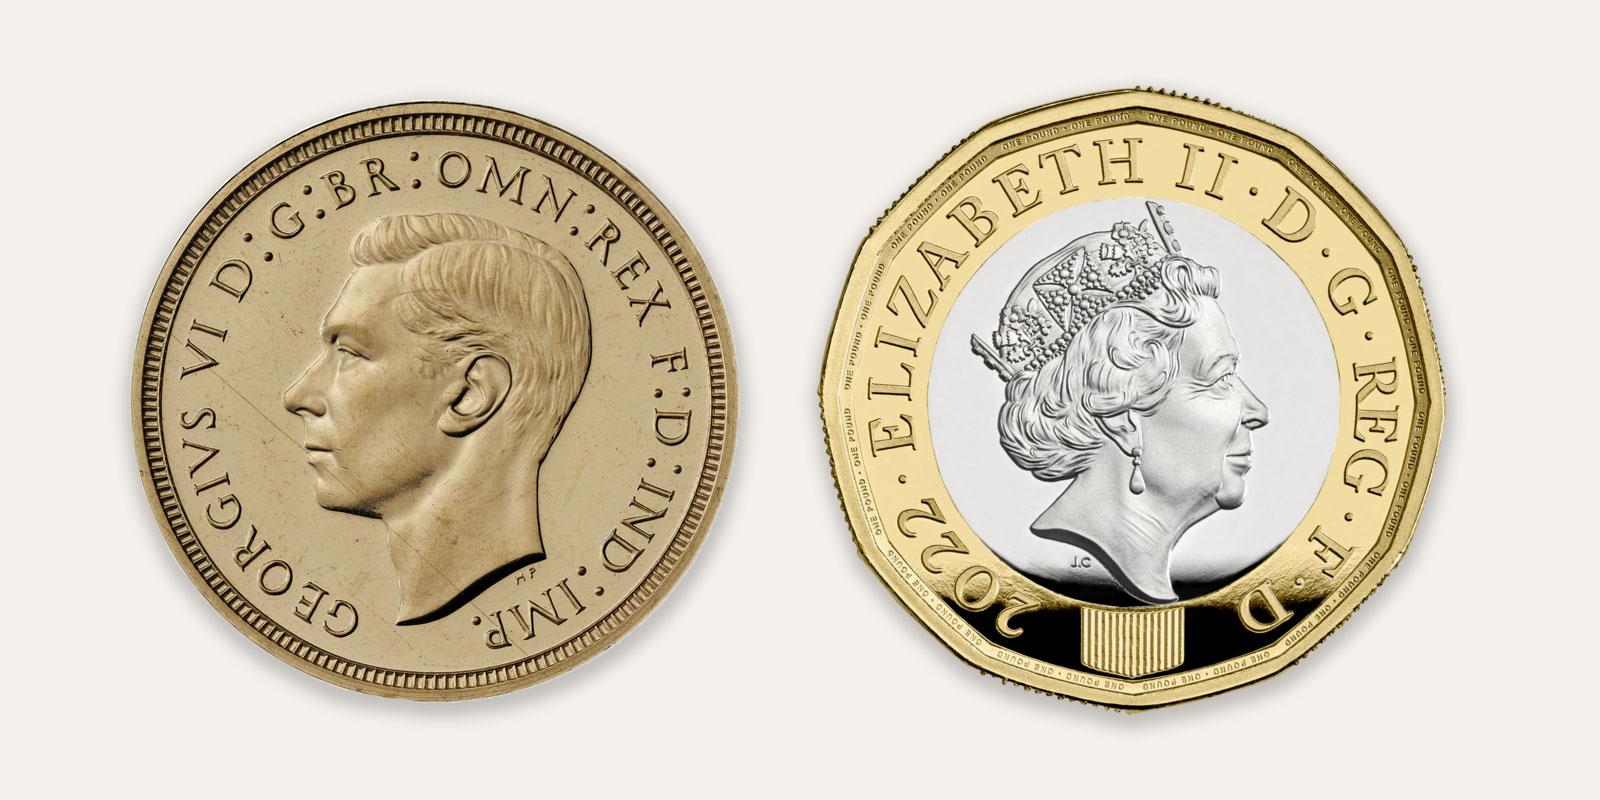 coin-portrait-tradition-header.jpg?width